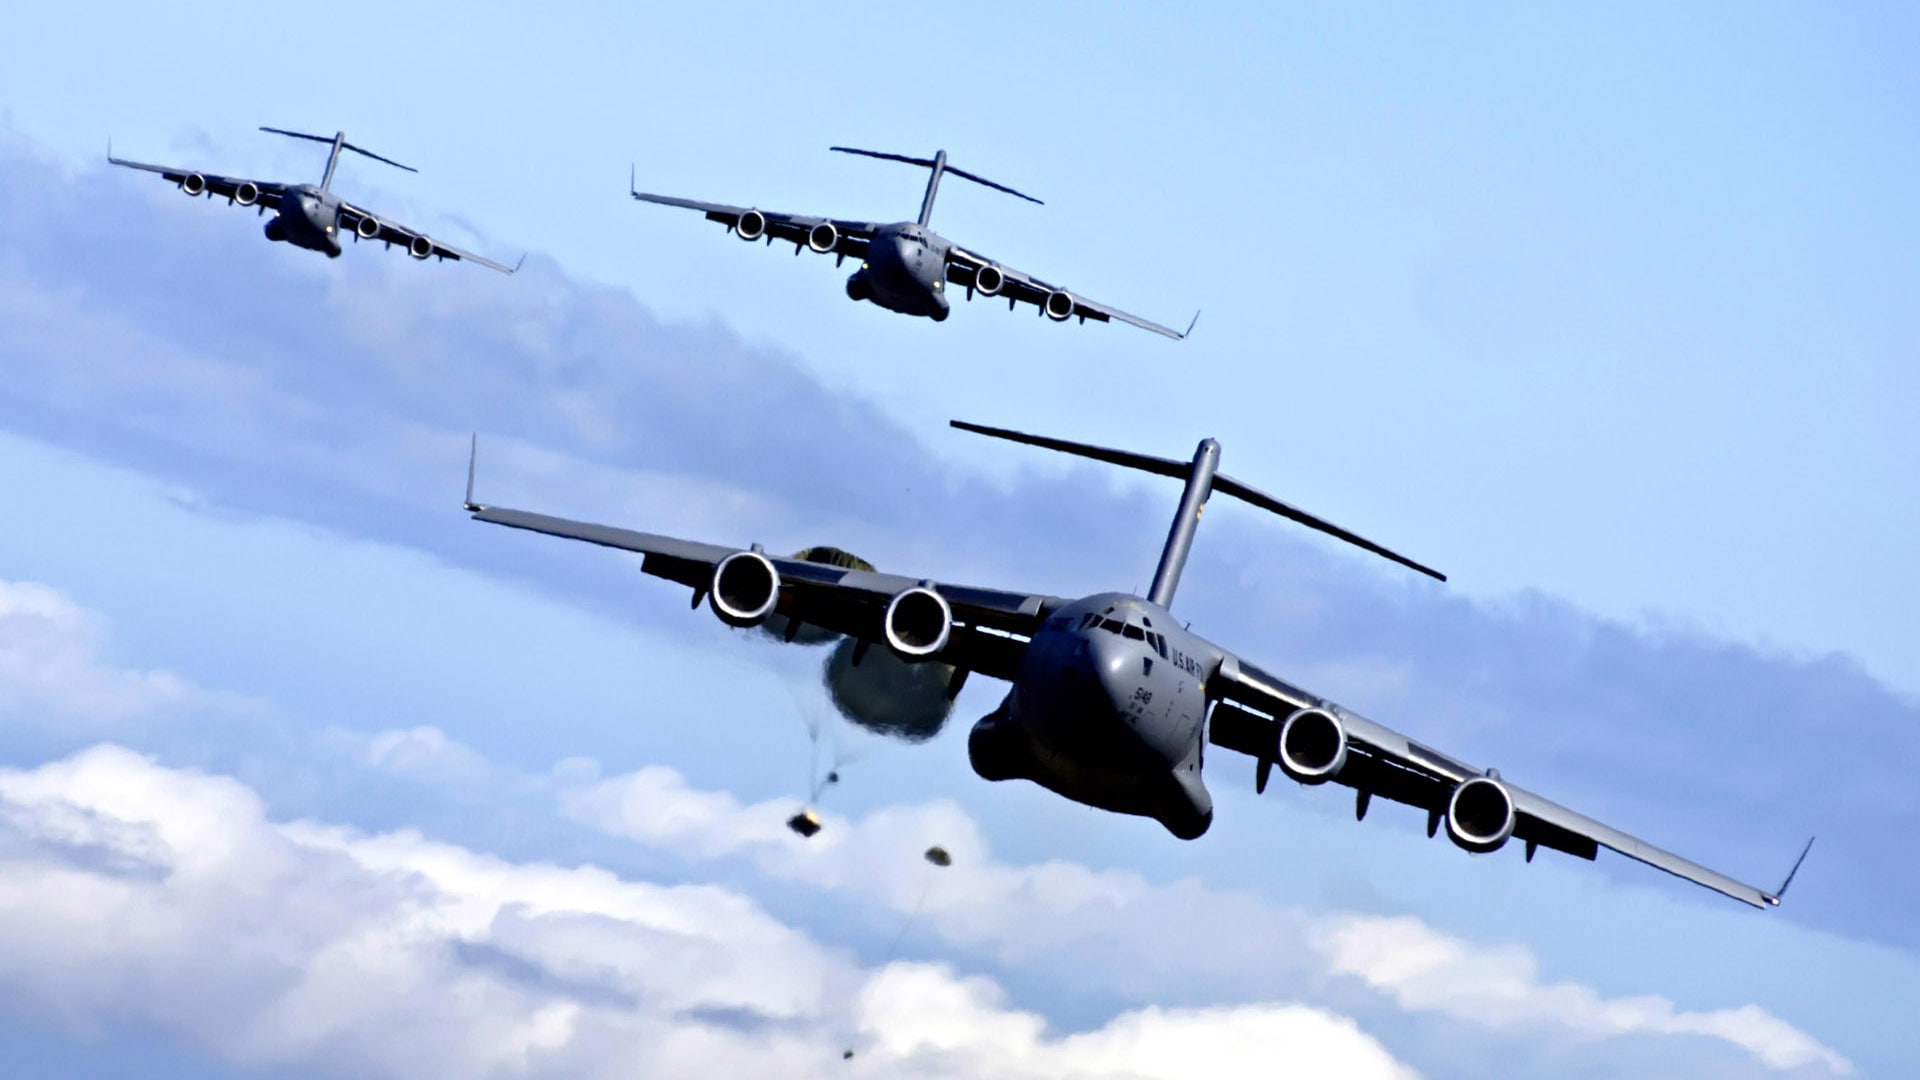 aircraft, airplane, jet, warplane, vehicle, military vehicle